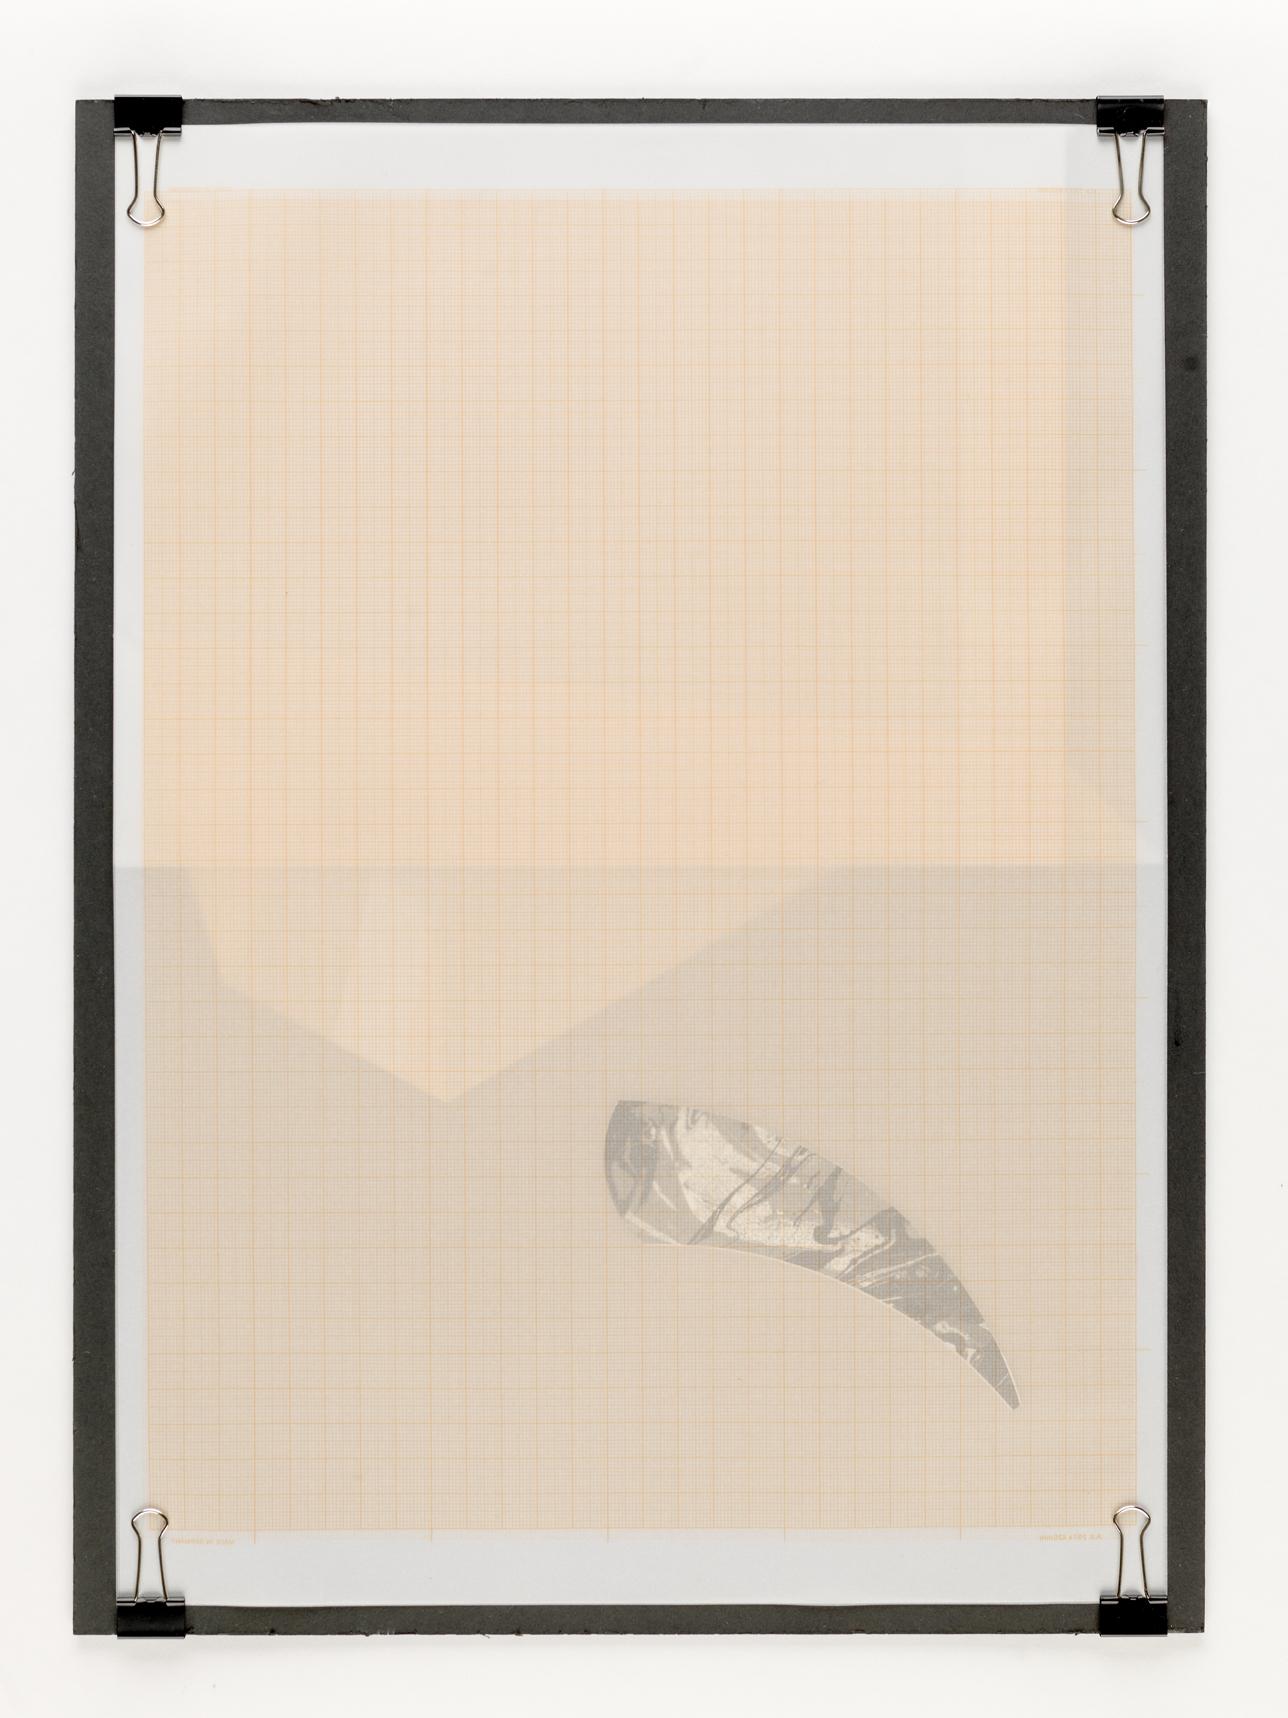 Chaos and Order 2 // Millimeterpapier, transparent // Karton // 43 x 32 cm // 2017